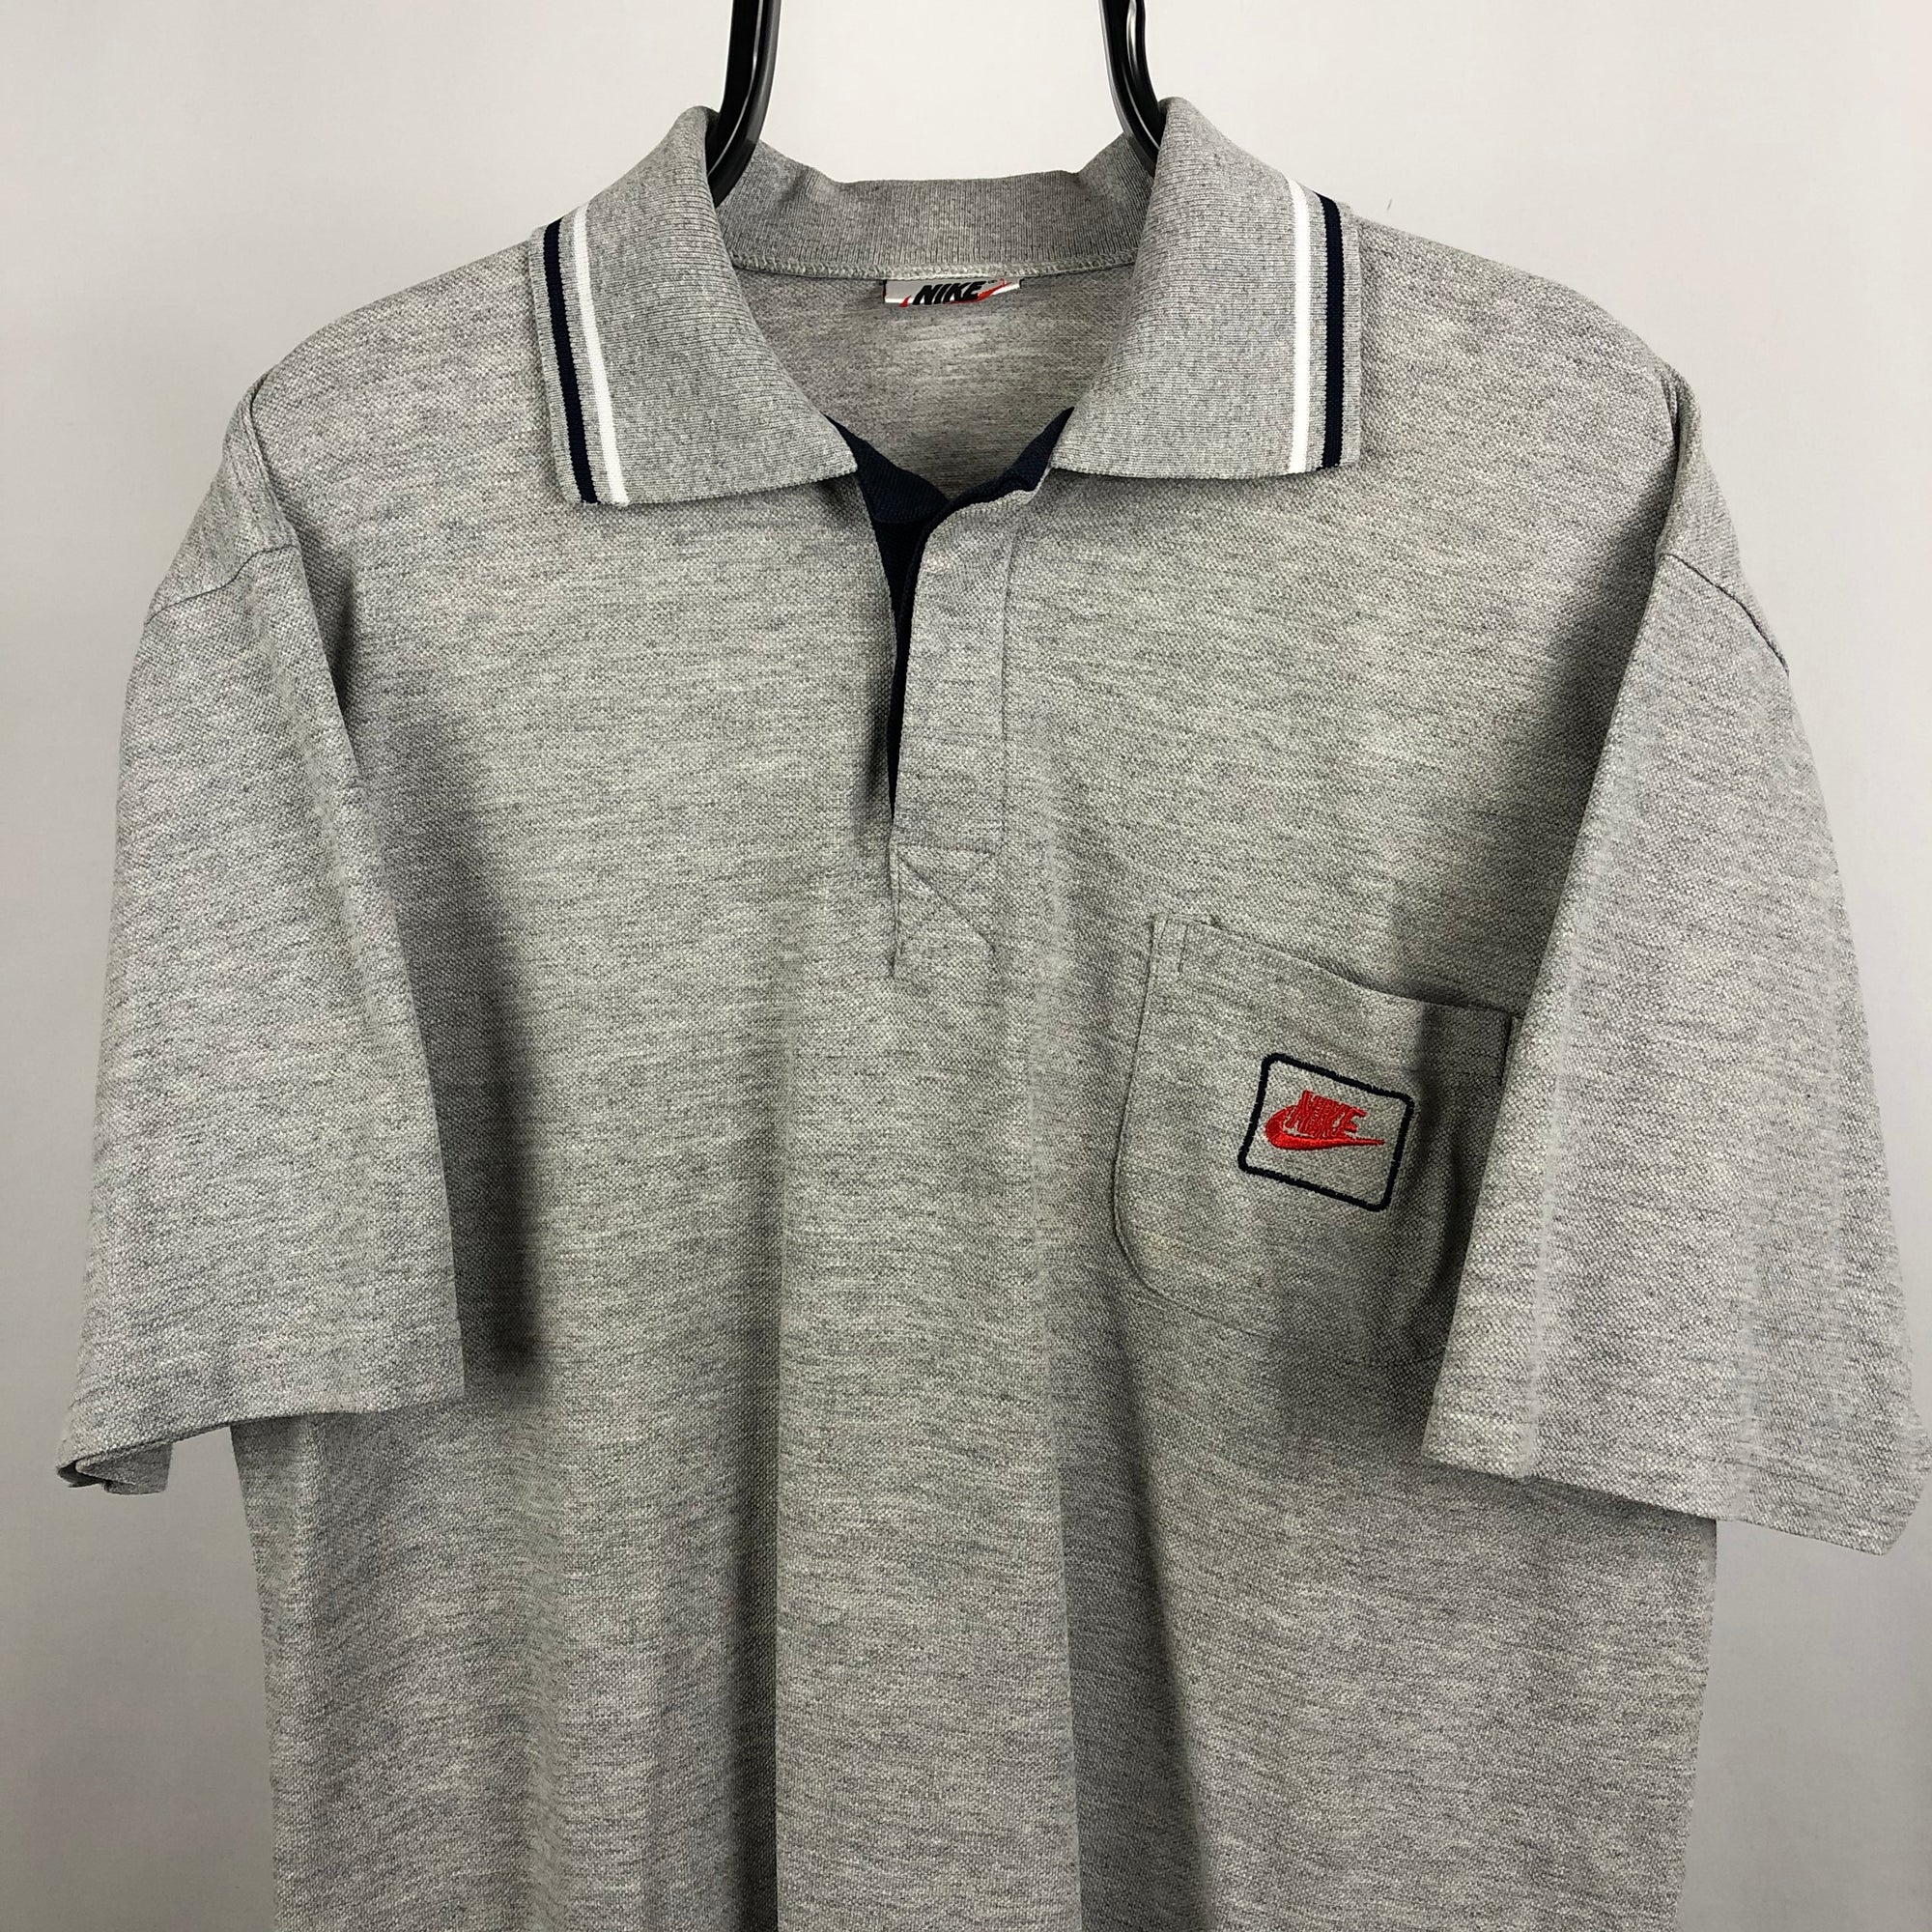 Vintage 90s Nike Polo Shirt in Grey - Men's Medium/Women's Large